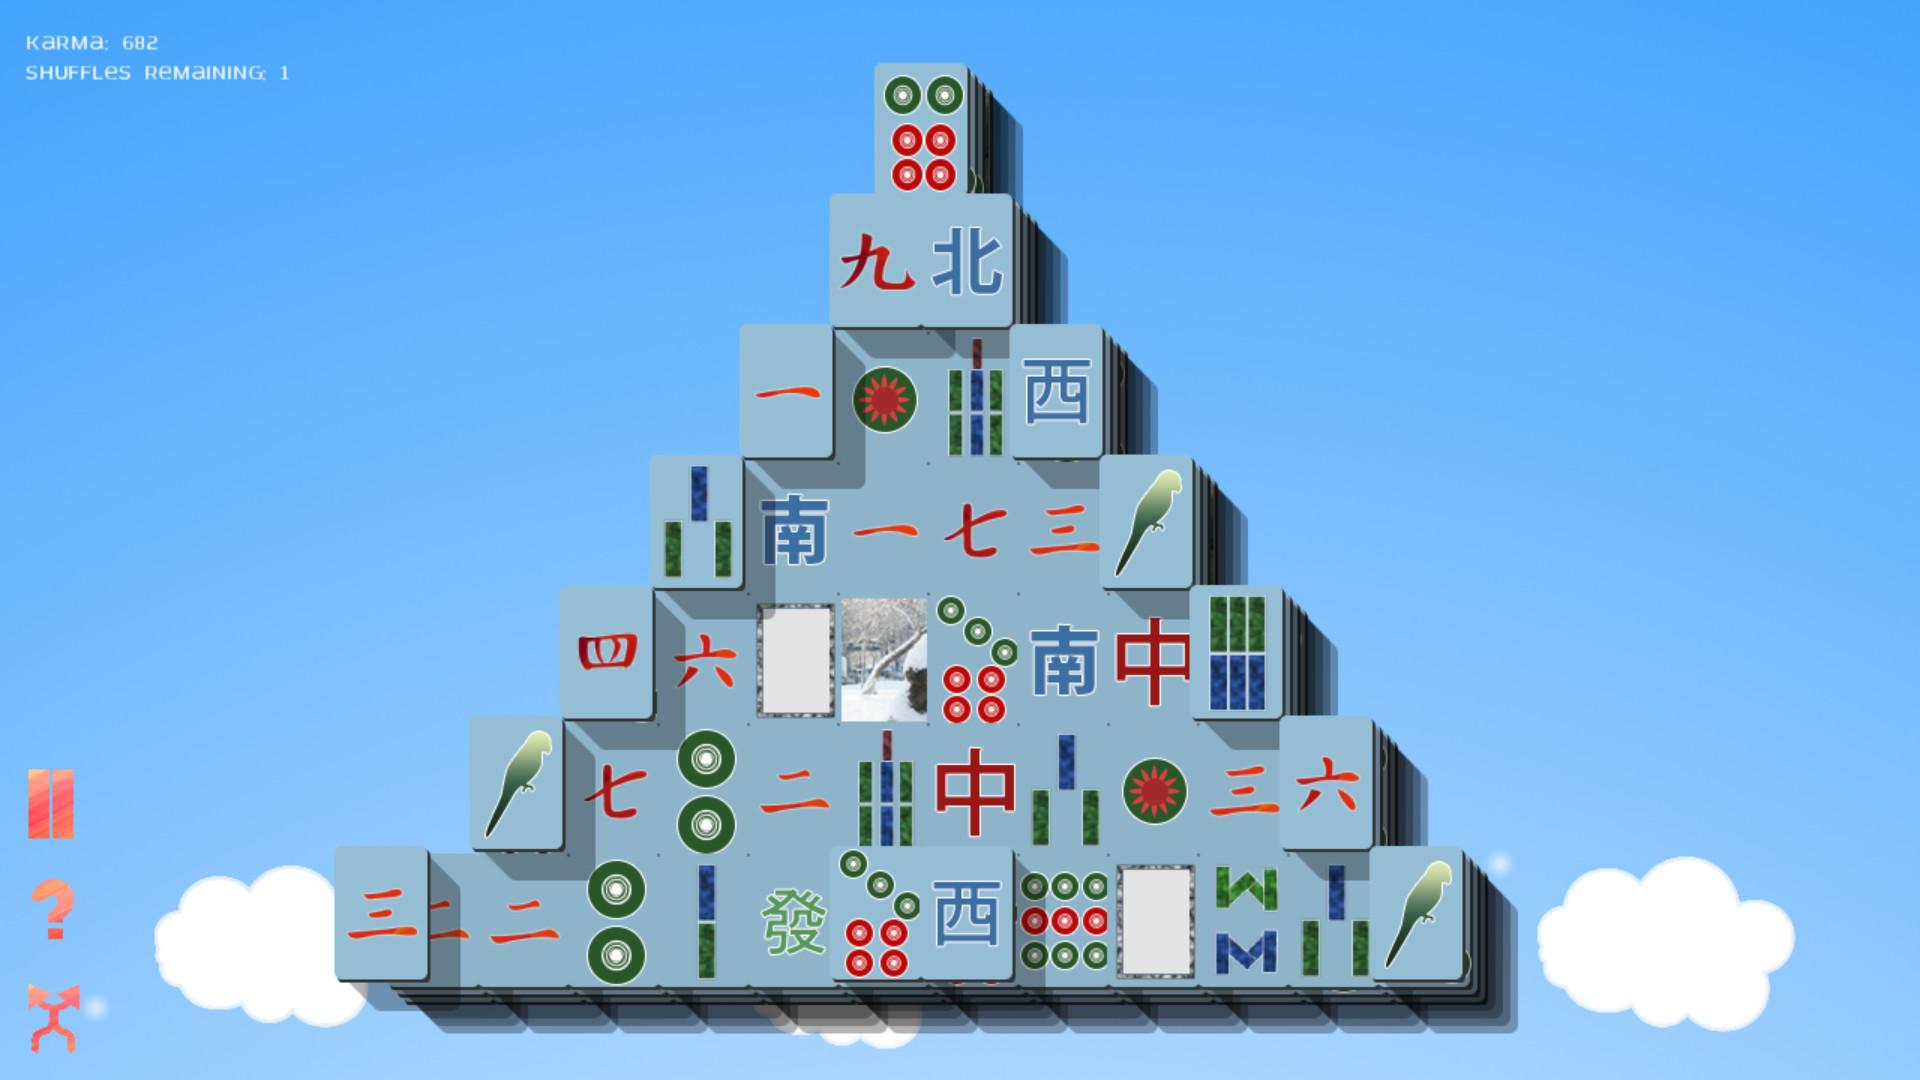 Screenshot №7 from game That's Mahjong!